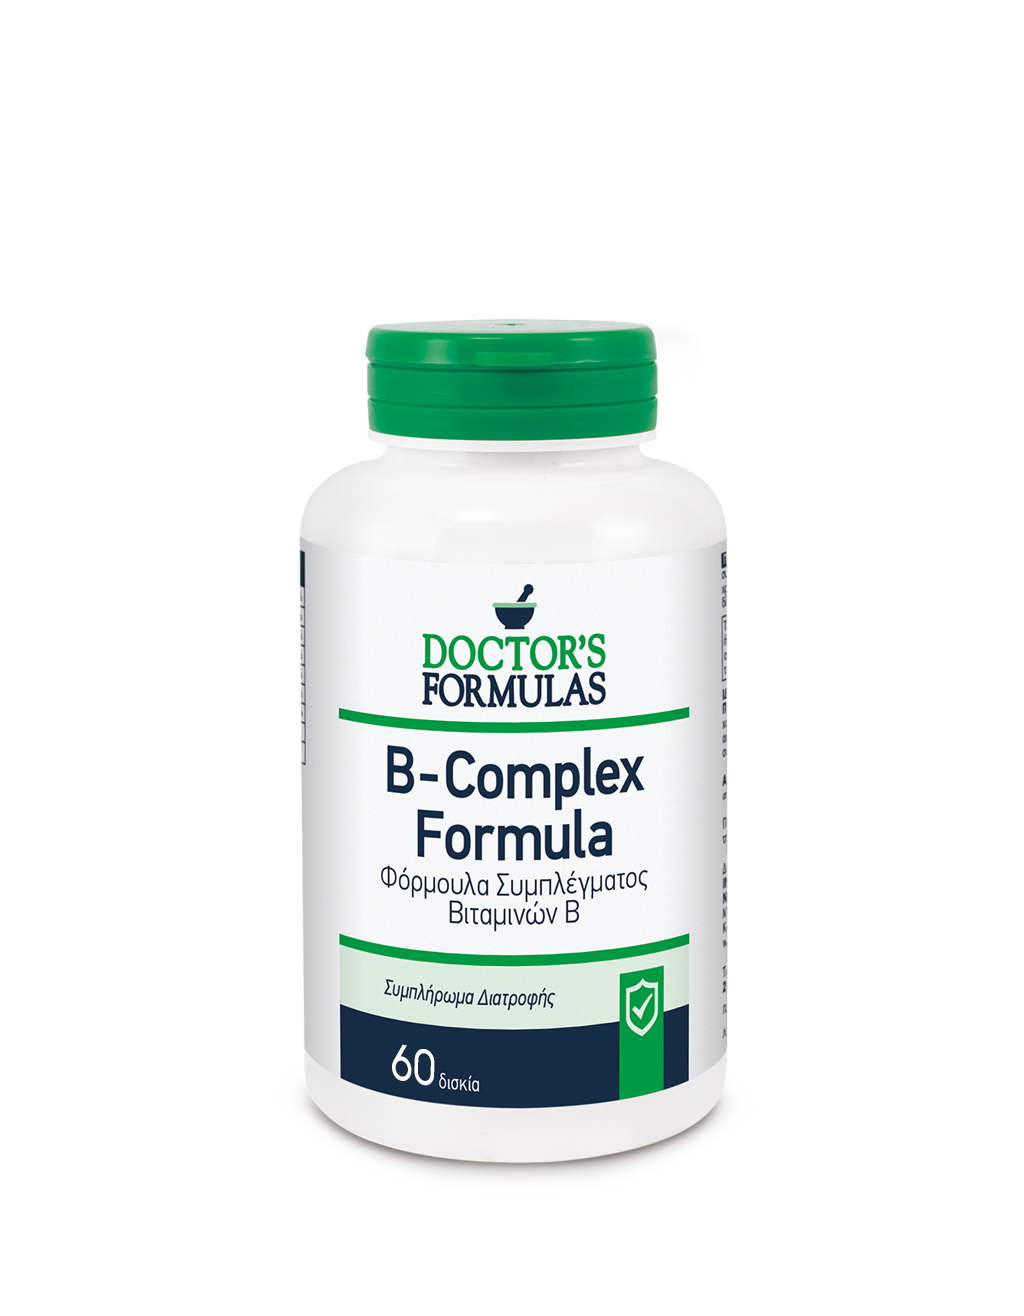 B-Complex | Φόρμουλα Βιταμινών Β